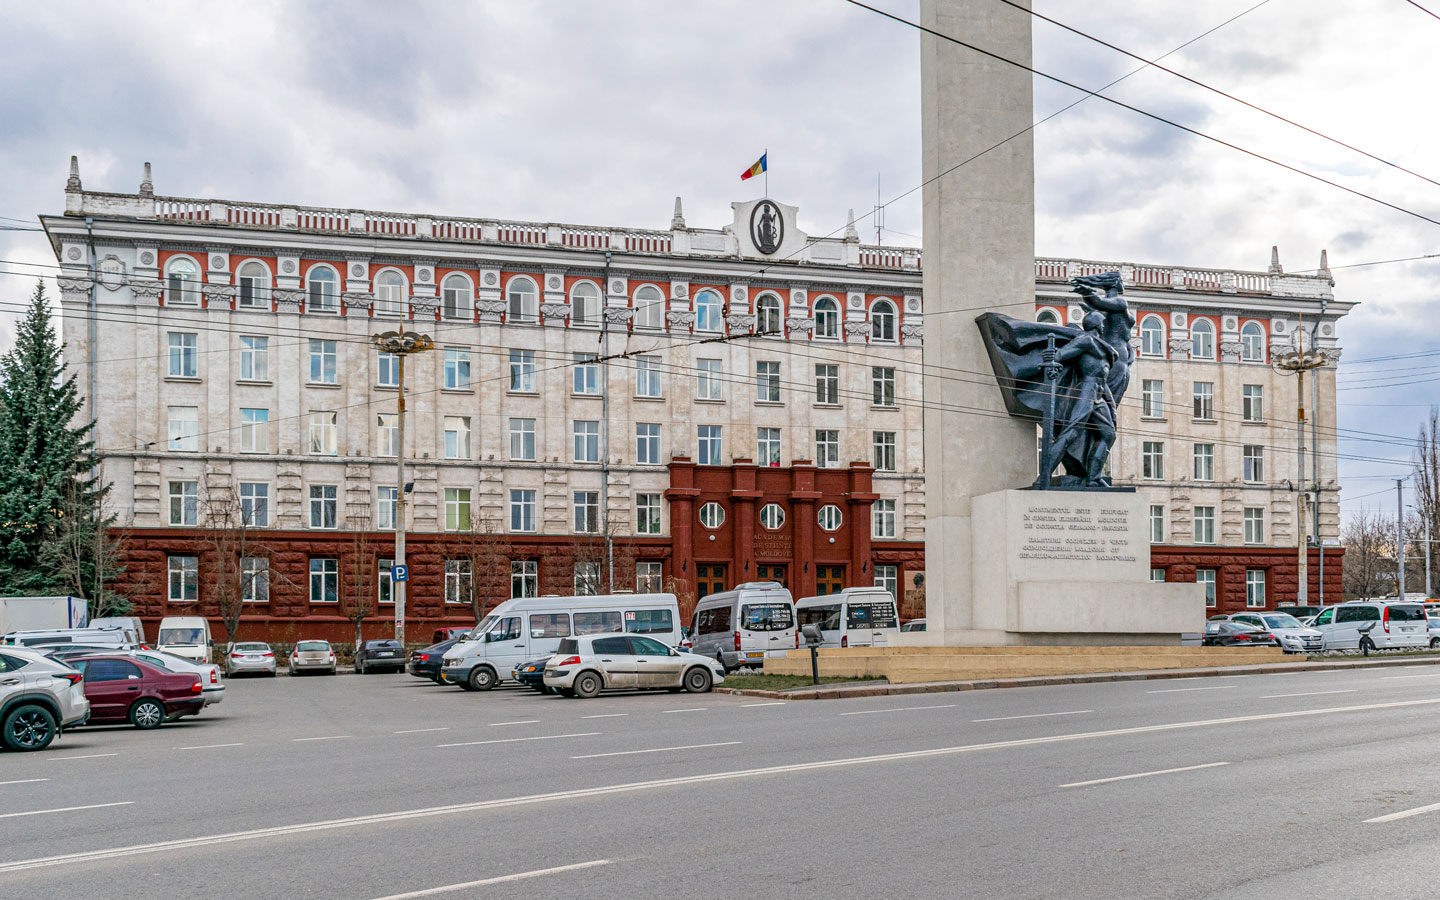 The Moldovan Academy of Sciences